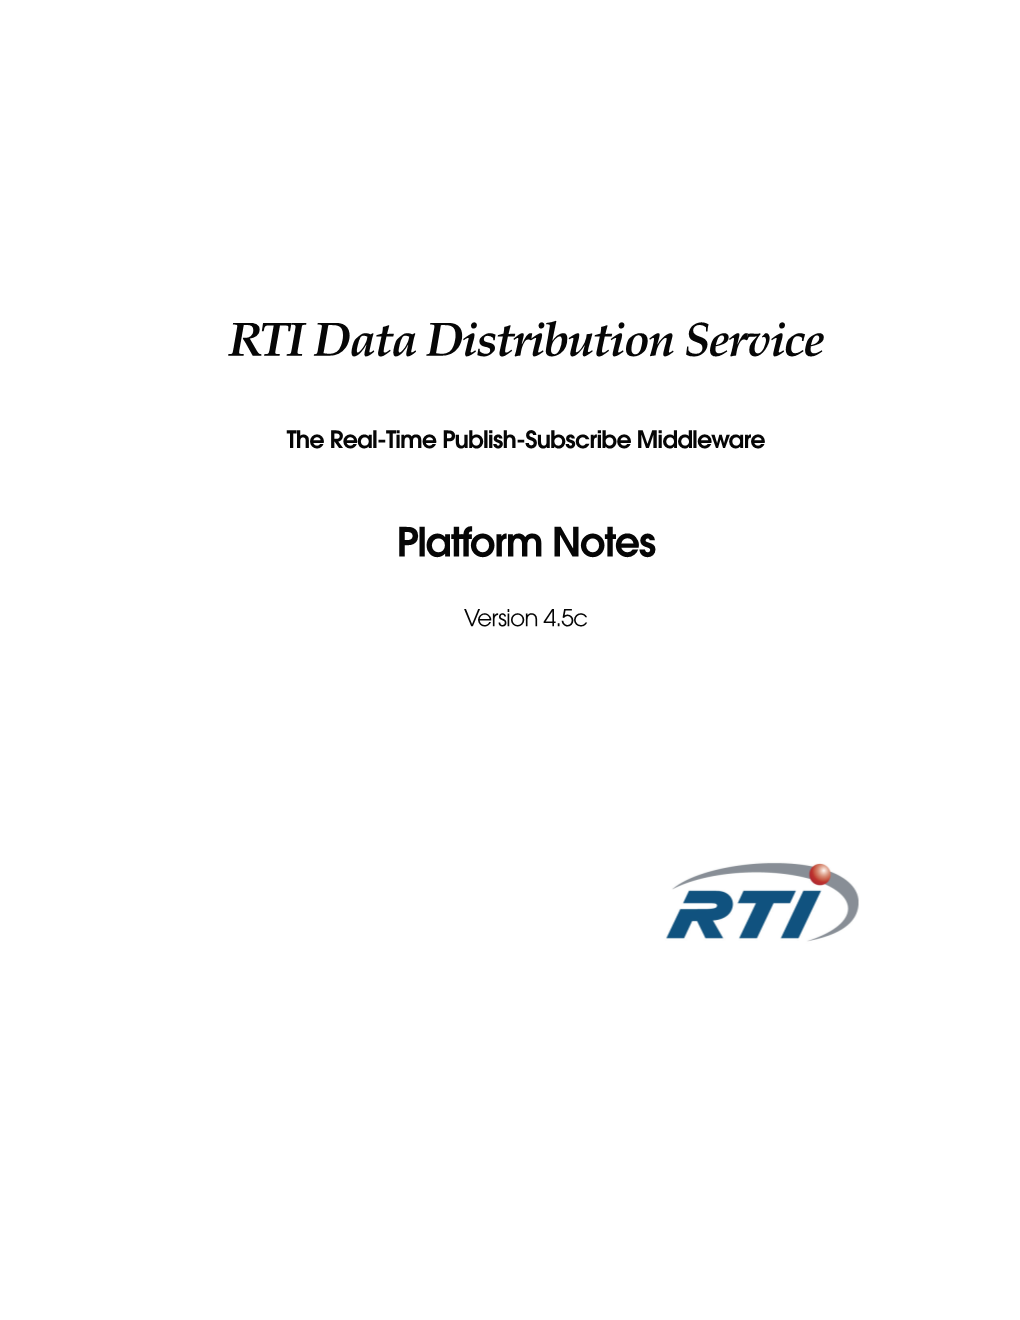 RTI Data Distribution Service Platform Notes